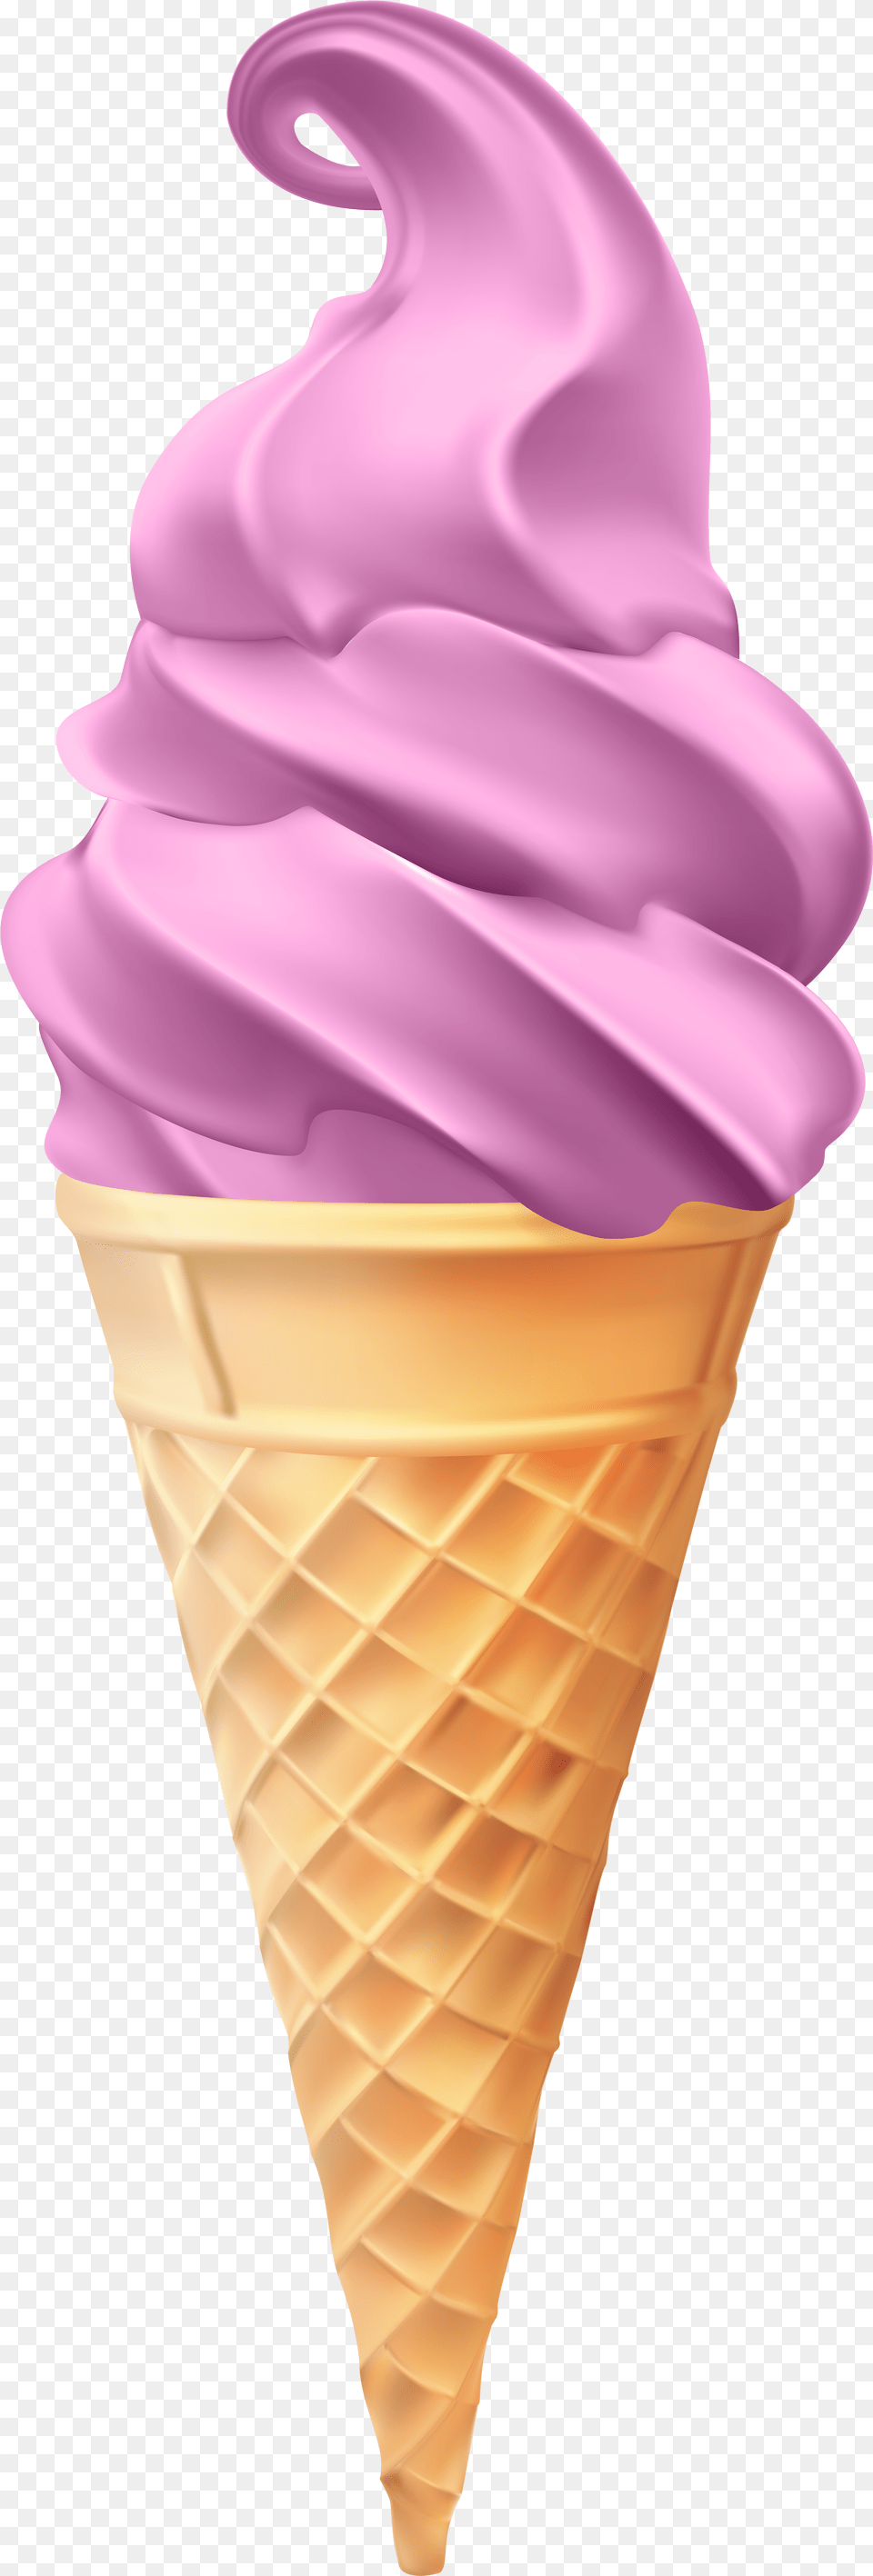 Ice Cream Cone Clip Art Pink Ice Cream, Dessert, Food, Ice Cream, Soft Serve Ice Cream Png Image